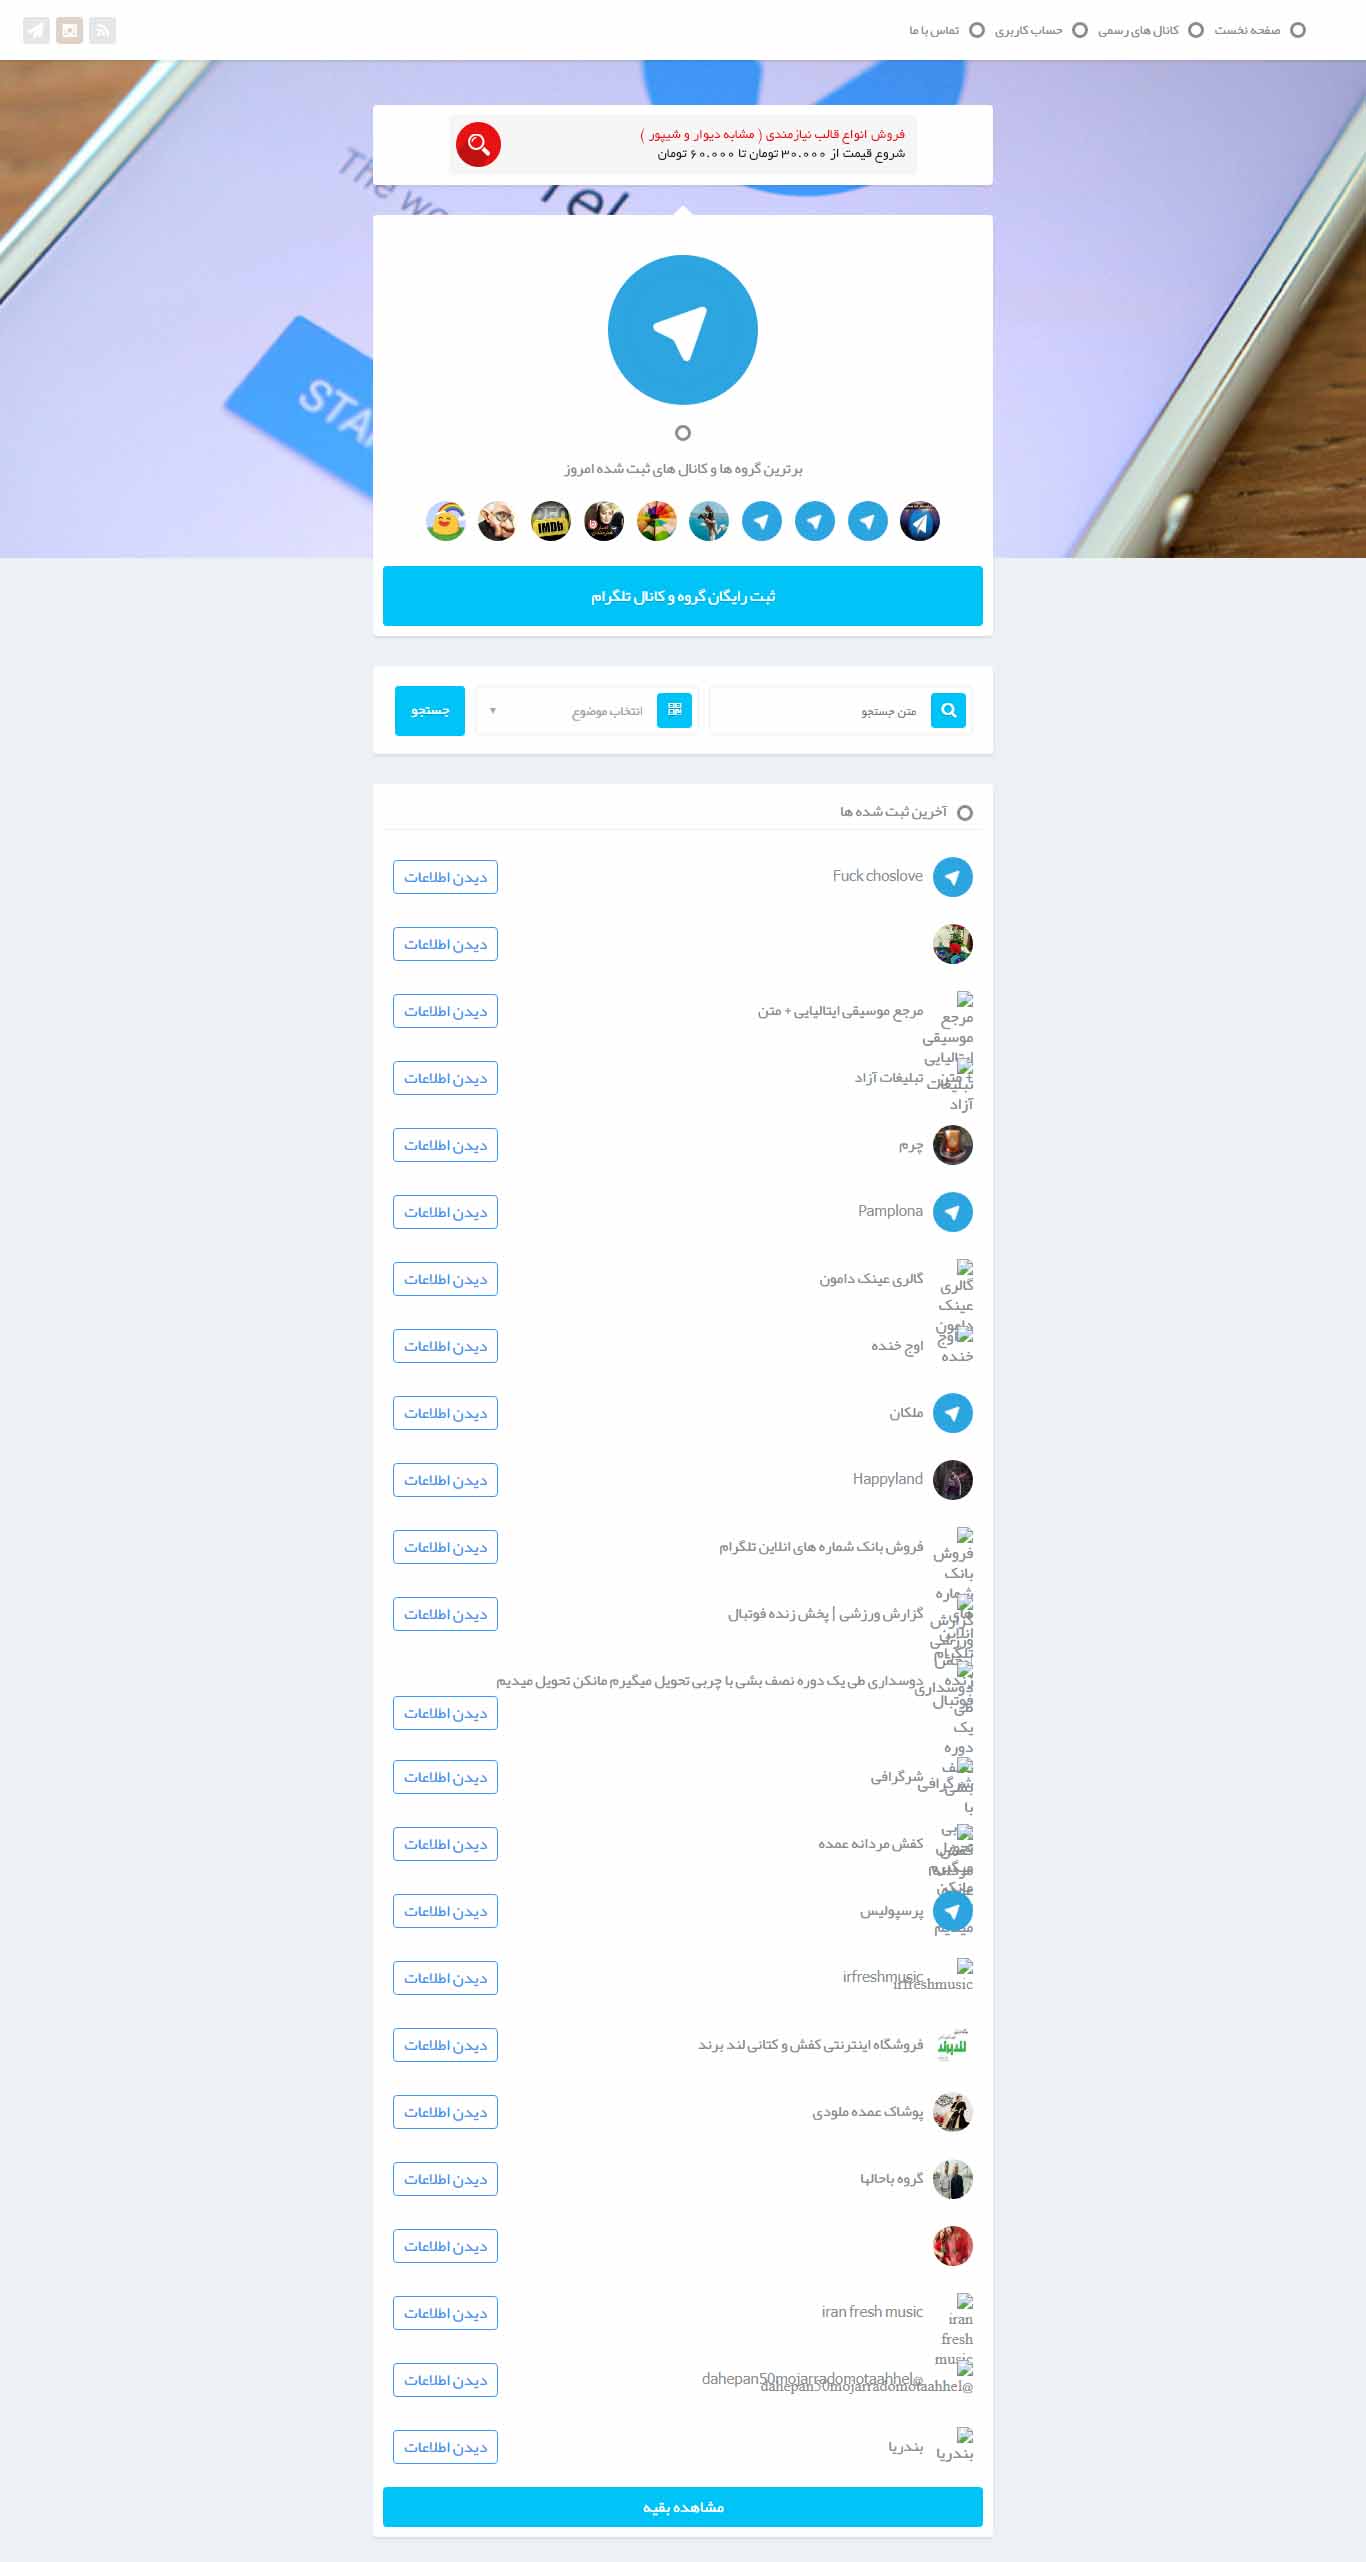 اسکریپت ثبت کانال تلگرام - فروش اسکریپت ثبت کانال تلگرام - سامانه ثت ...